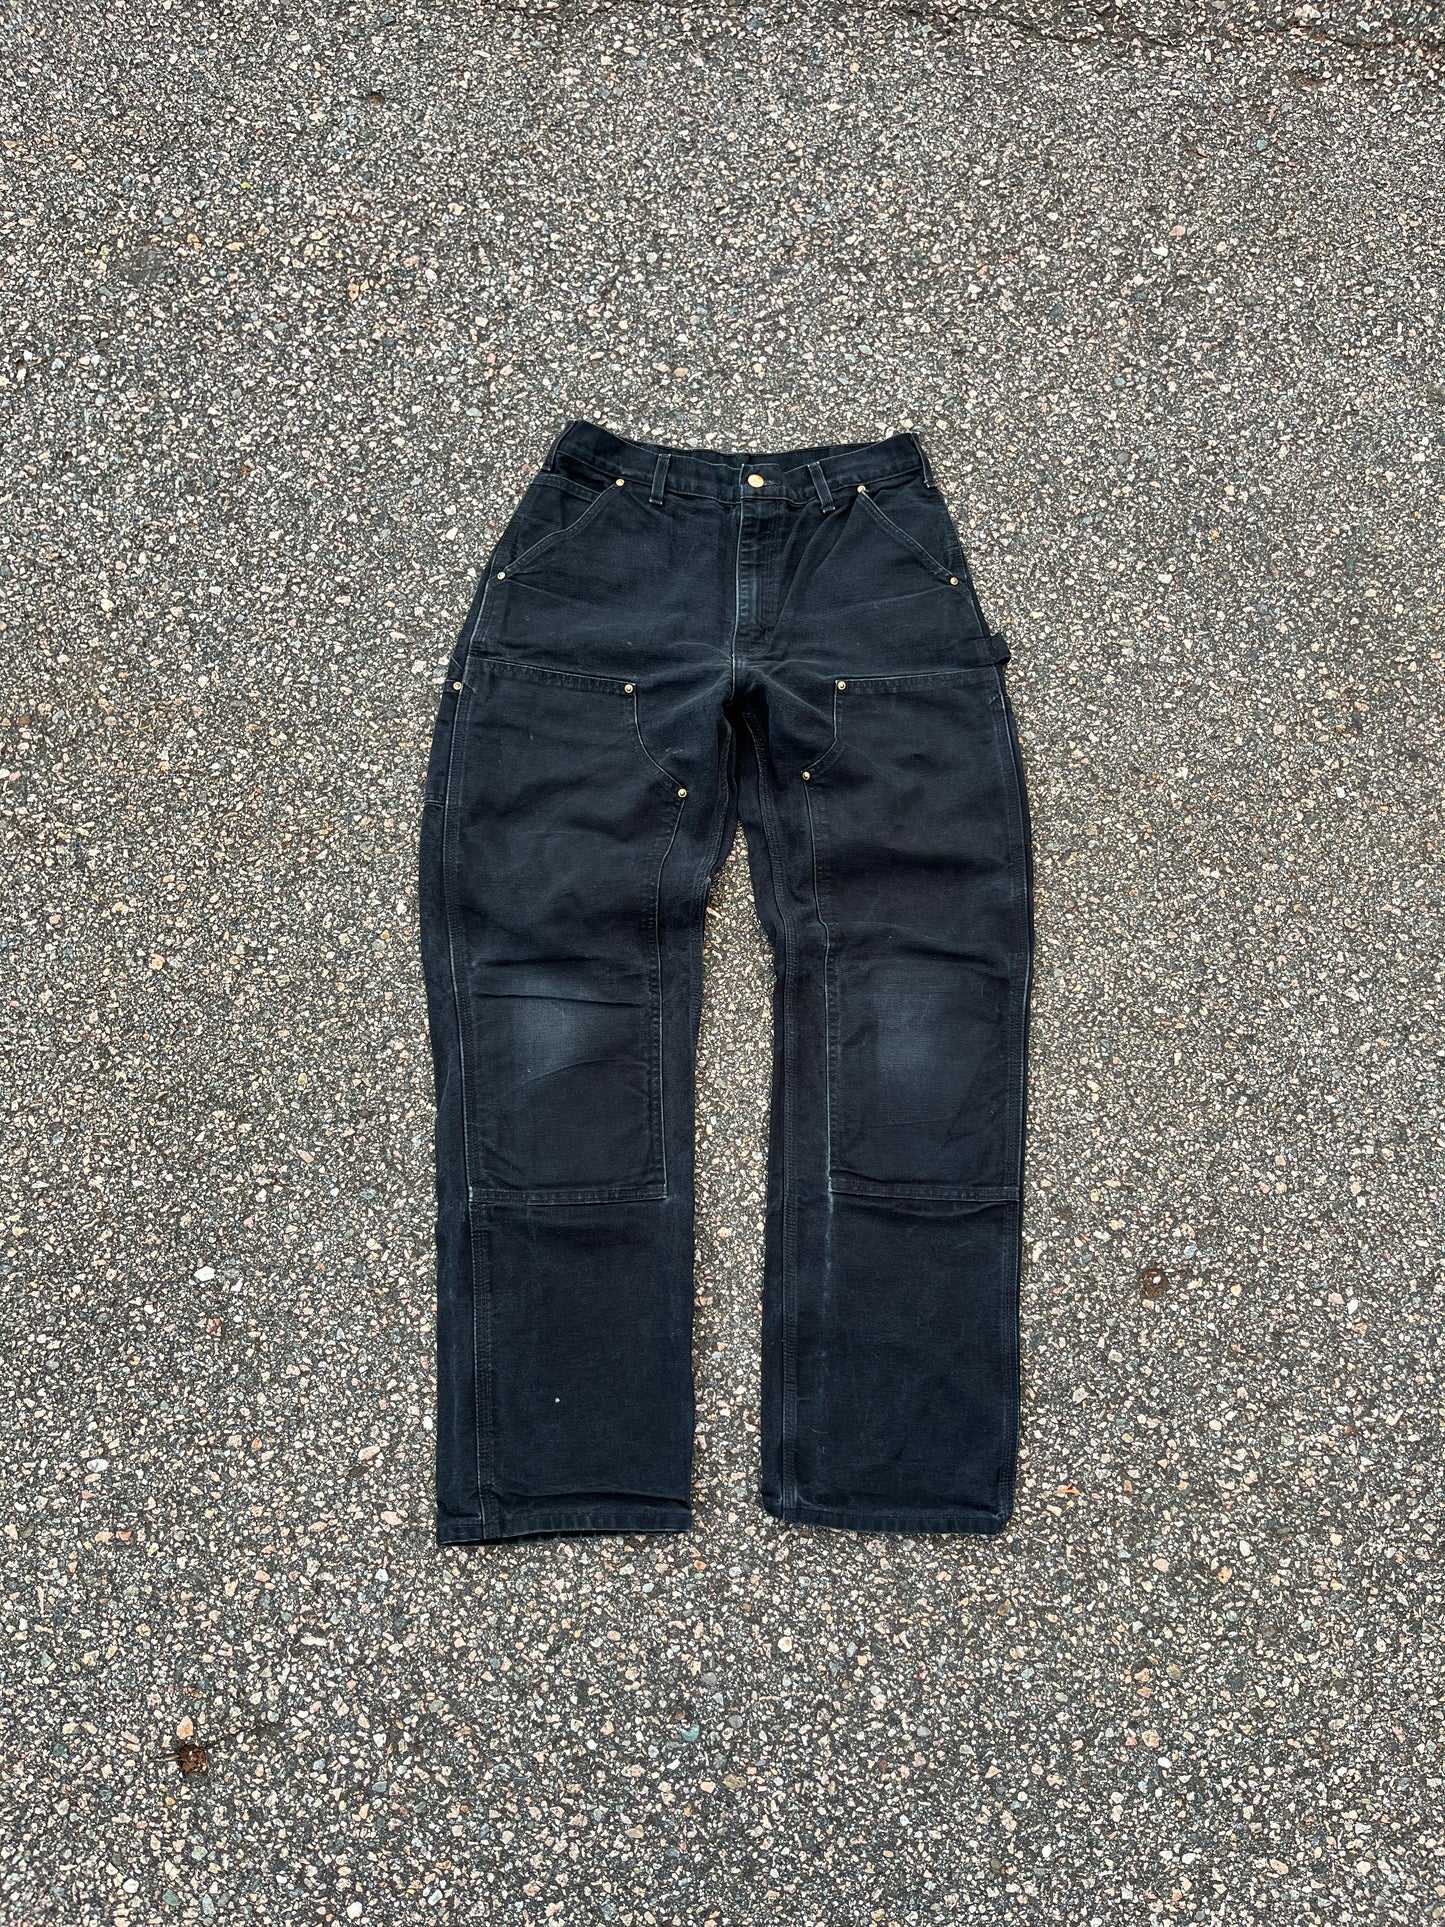 Faded Black Carhartt Double Knee Pants - 30 x 32